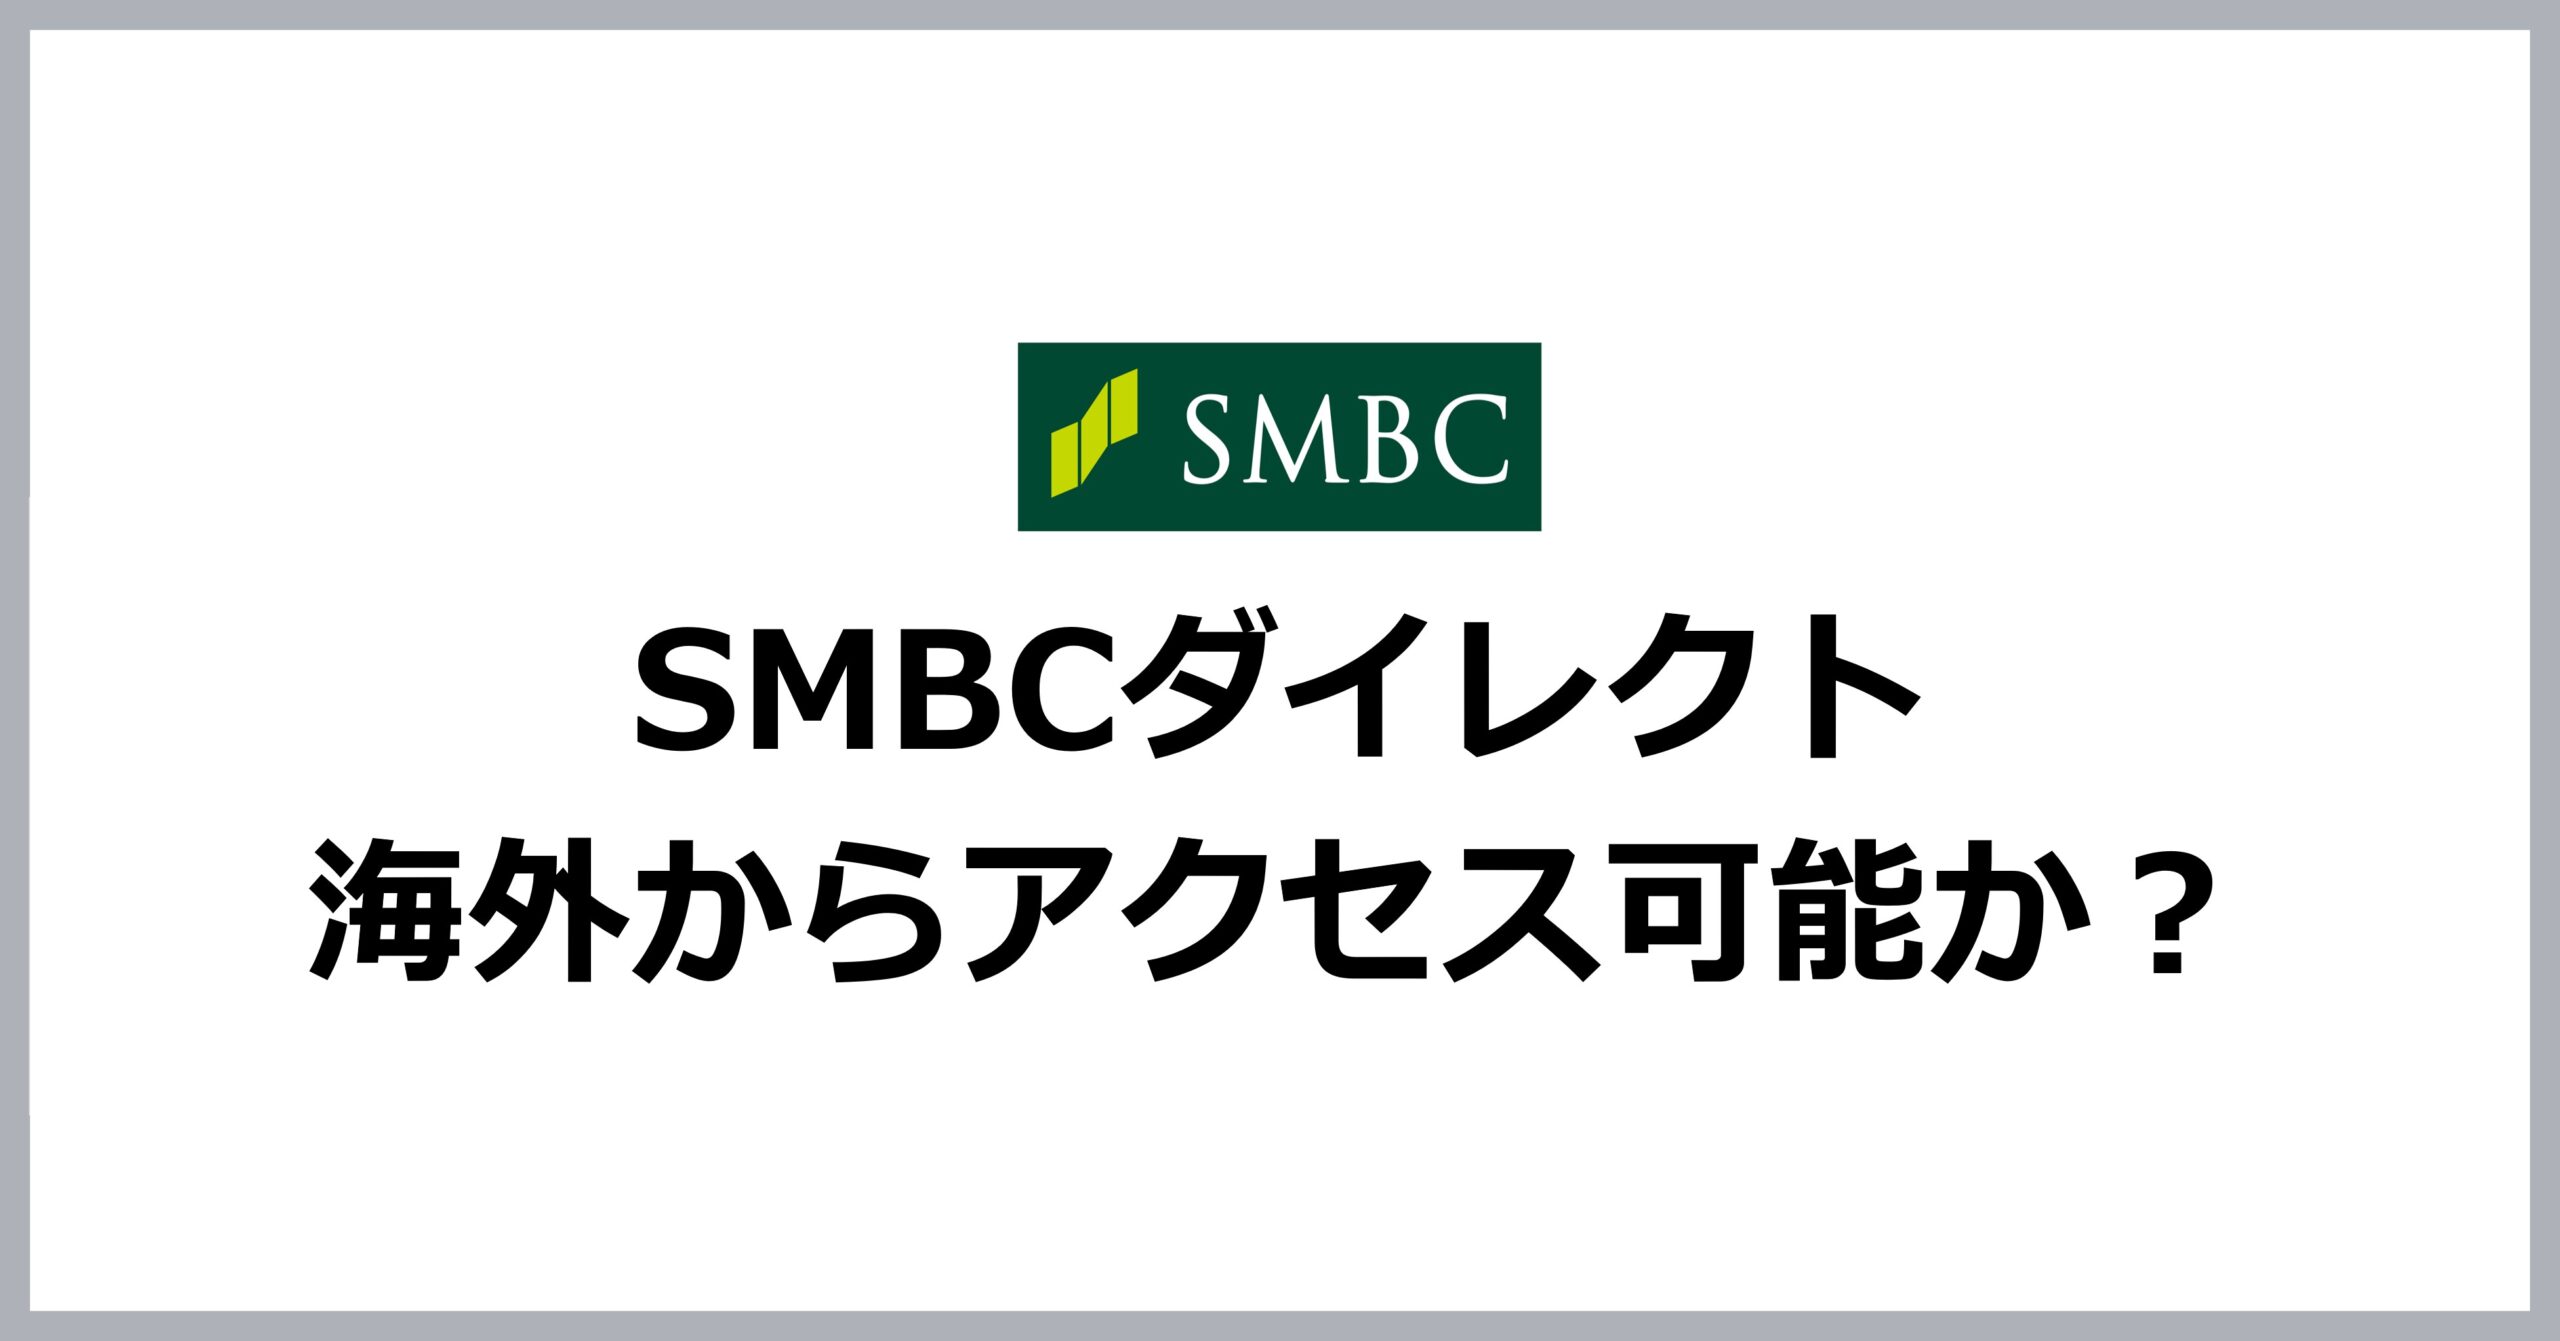 SMBCダイレクトは海外からアクセス可能か？